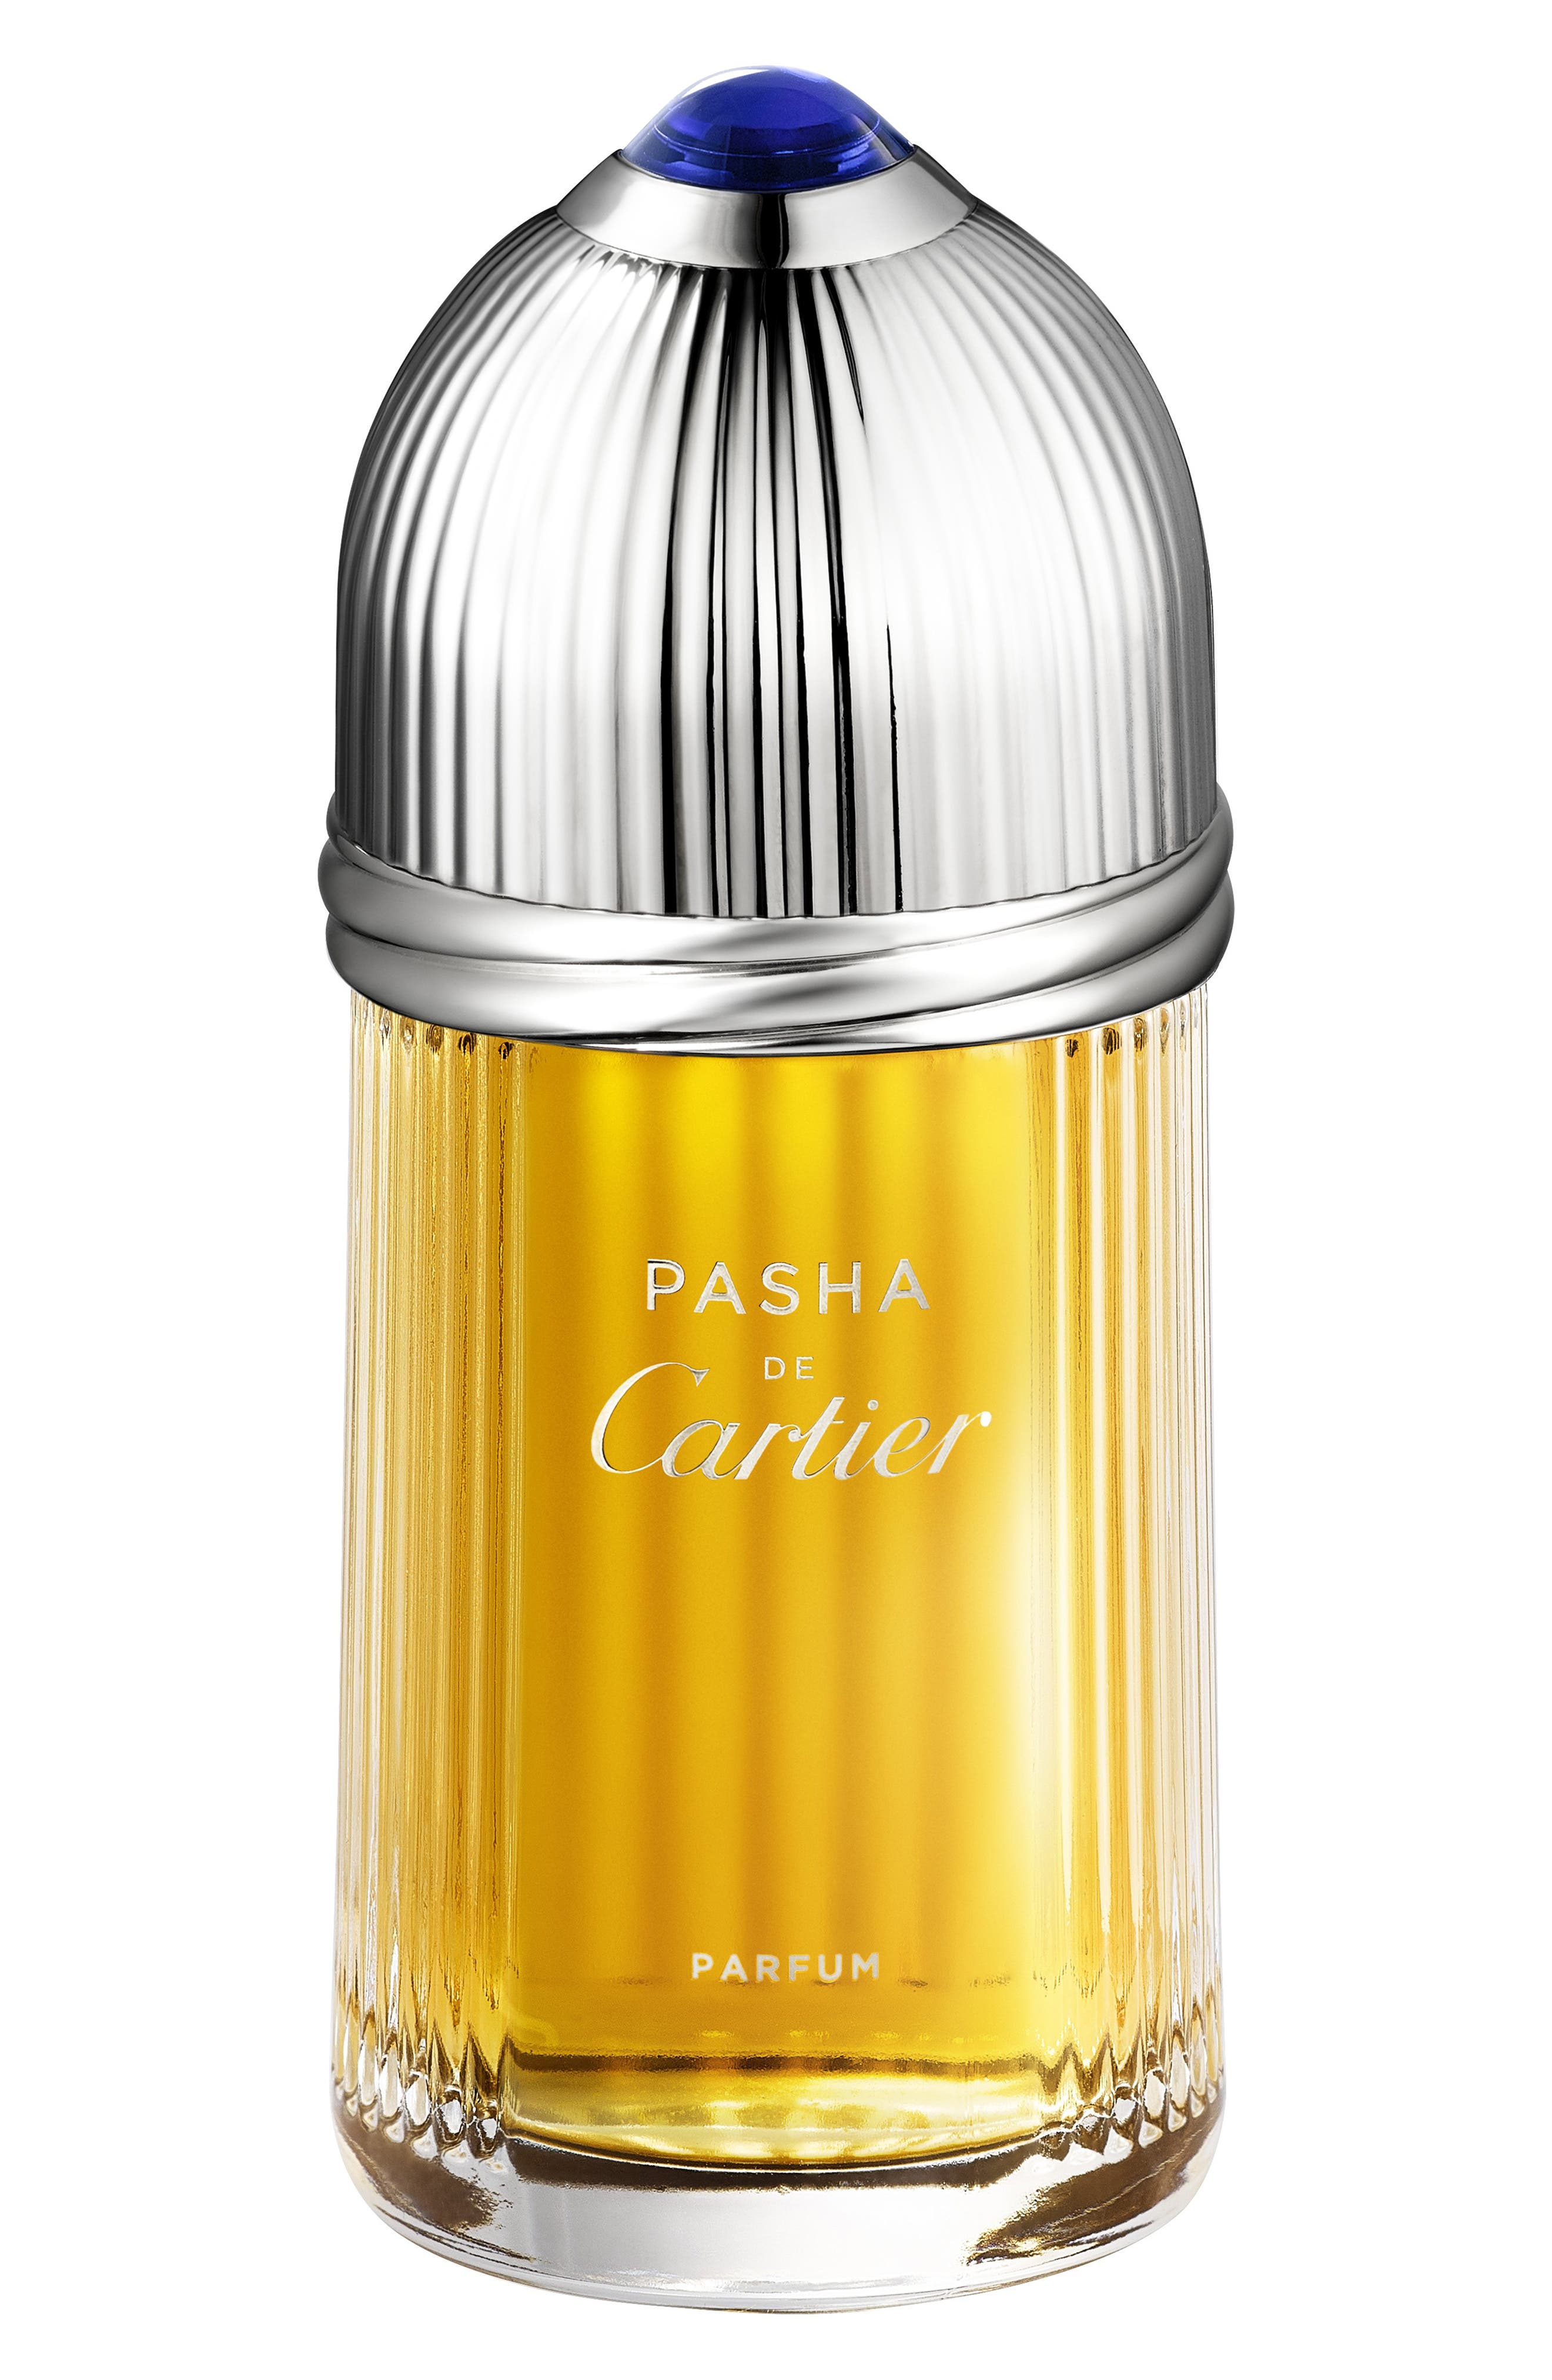 Pasha de Cartier Parfum at Nordstrom